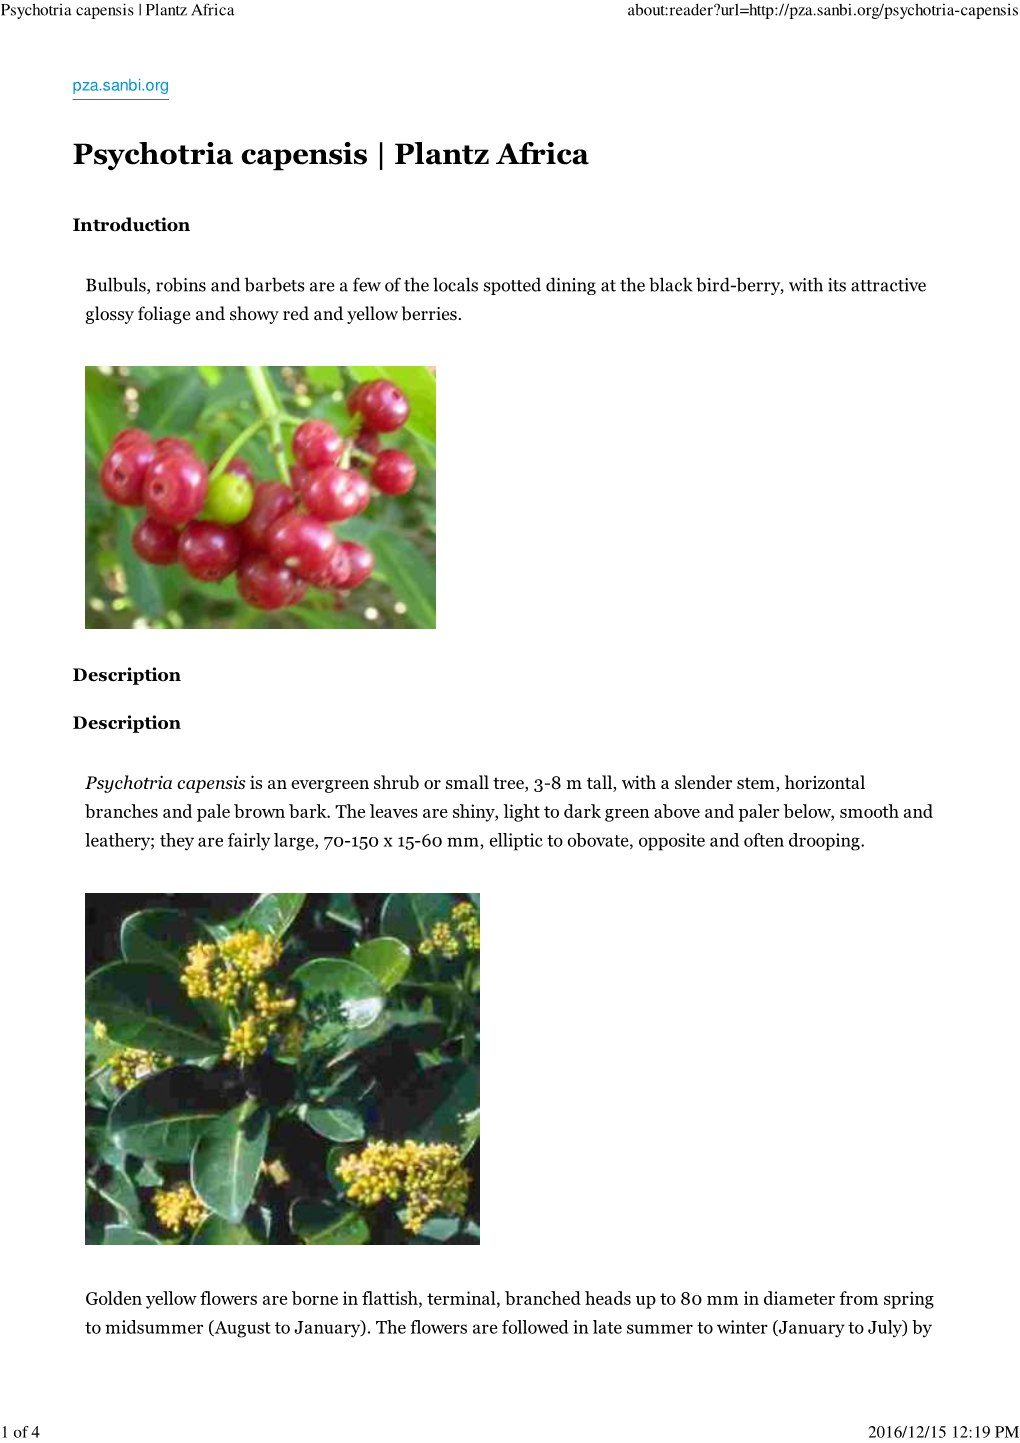 Psychotria Capensis | Plantz Africa About:Reader?Url=